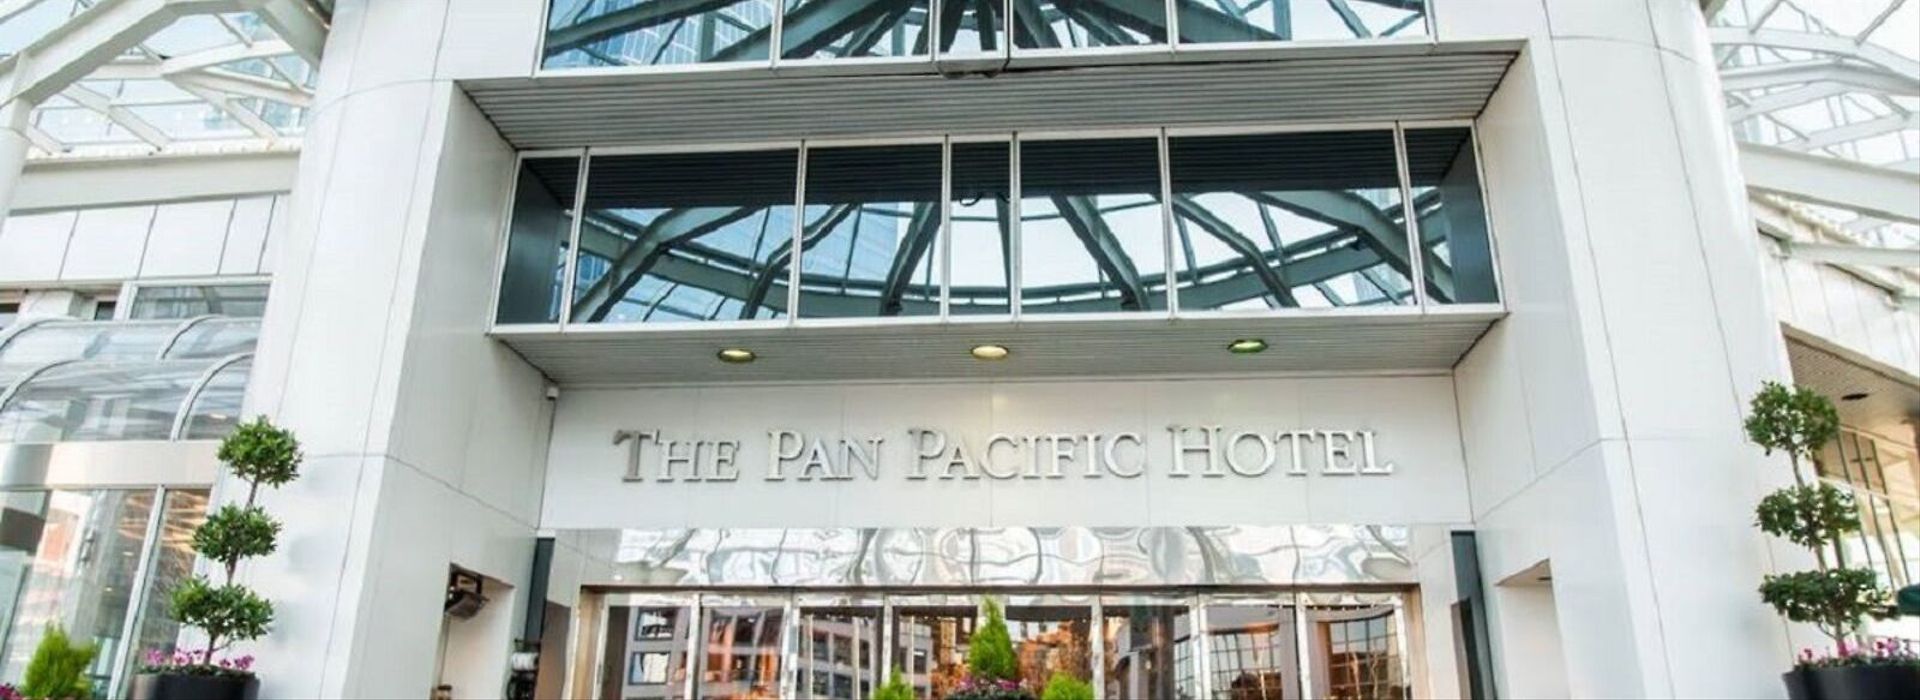 Pan Pacific Vancouver -Location shots.jpg